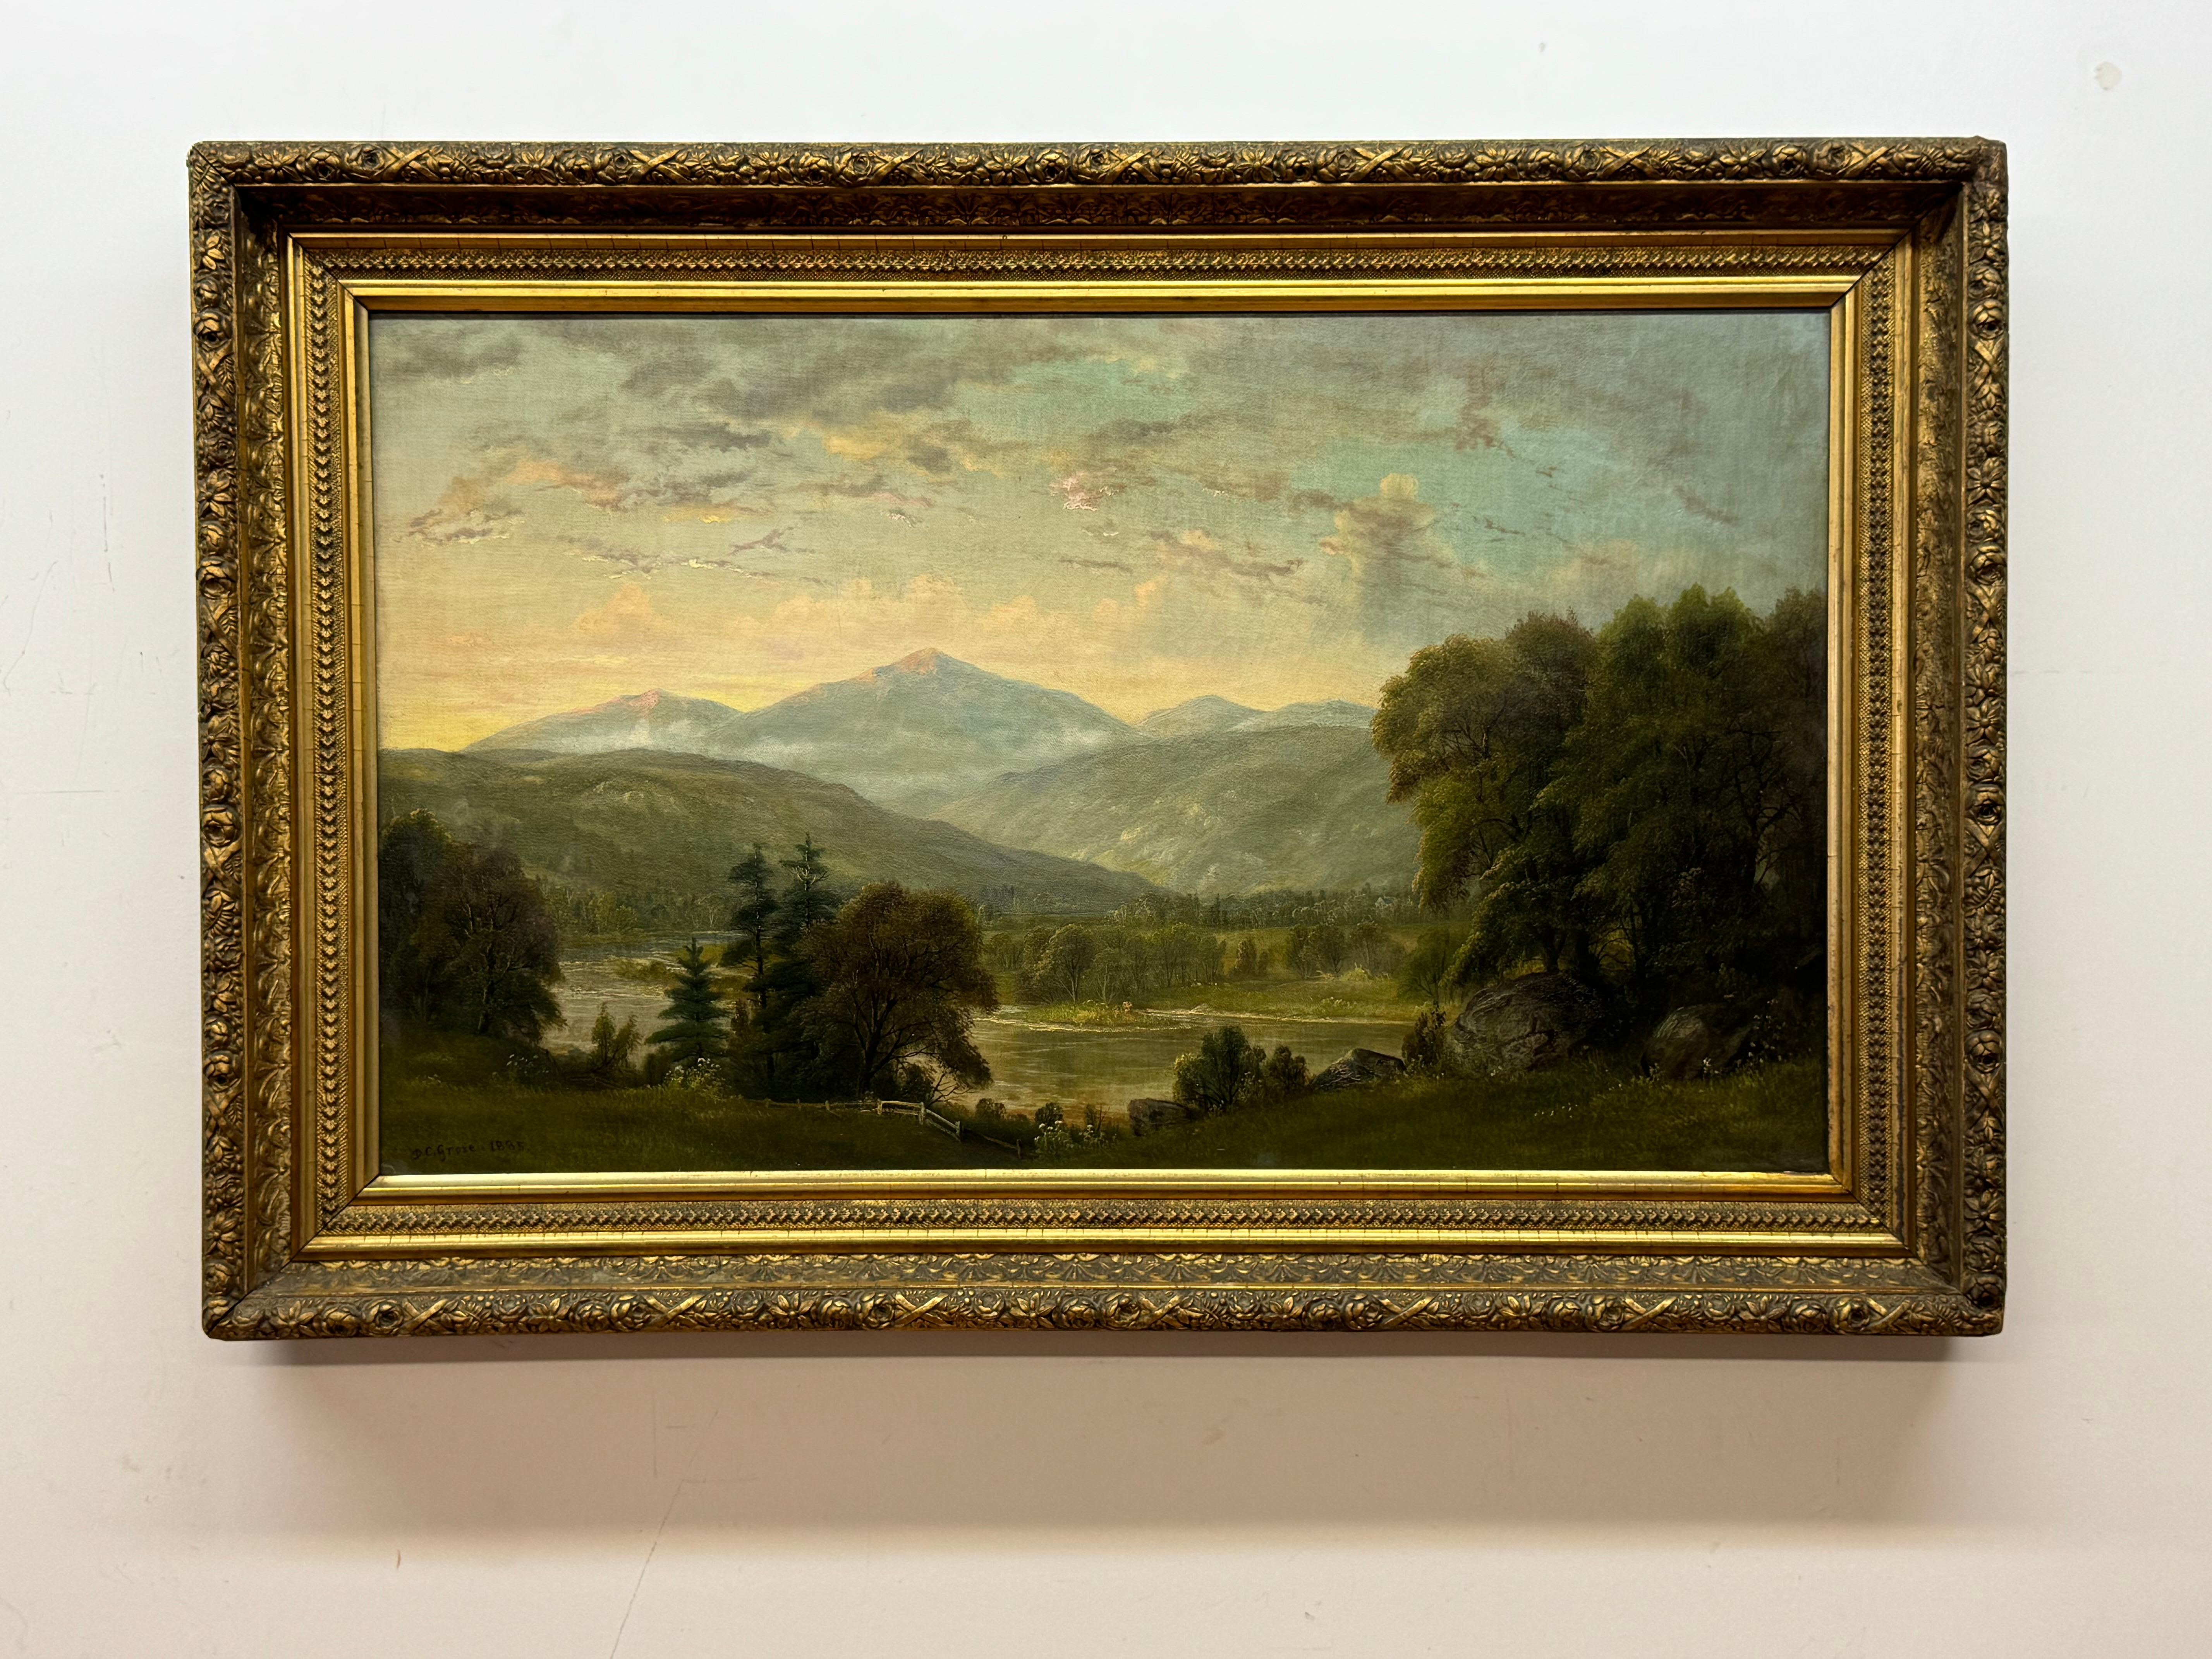 Daniel Charles Grose Mountain landscape, painting c 1885

Oil on canvas

Relined/ restored

18 x 30 on framed, 23.5 x 25.5 framed